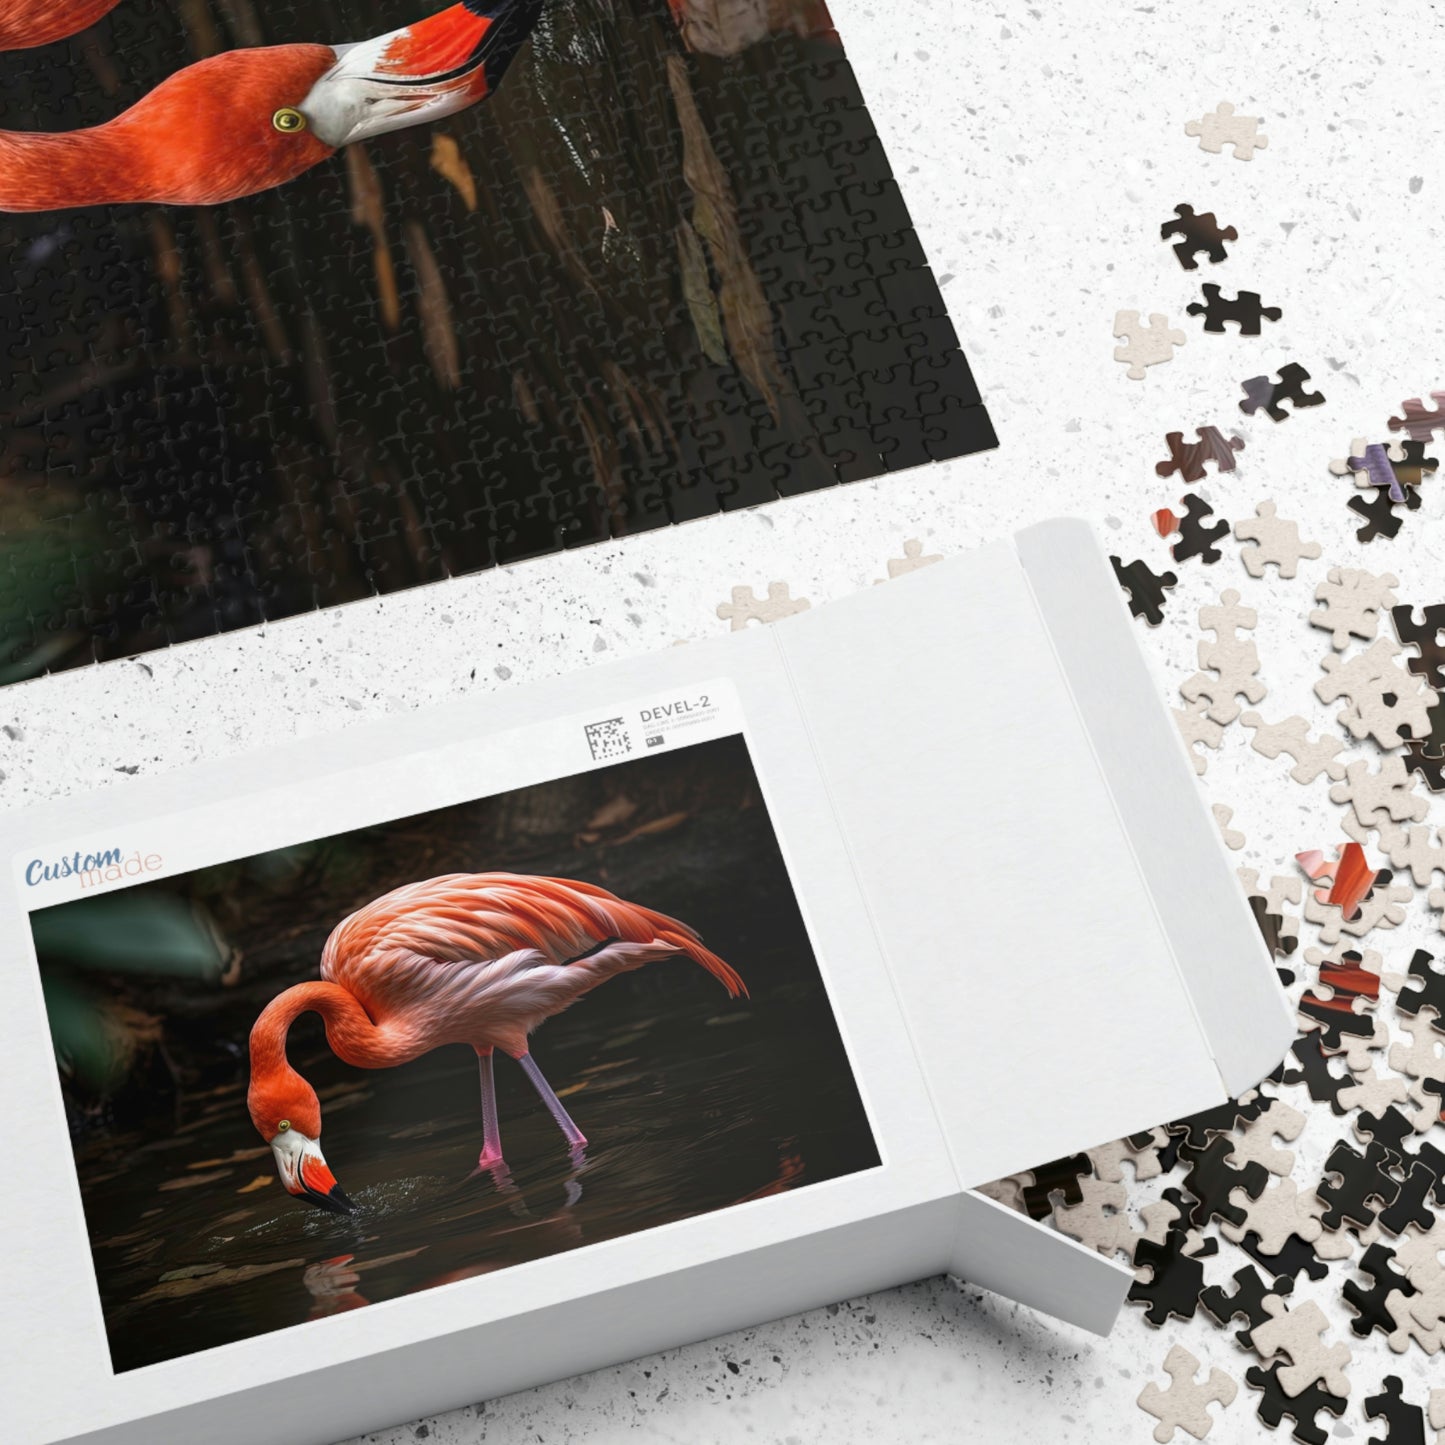 Flamingo Puzzle (500, 1014-piece)